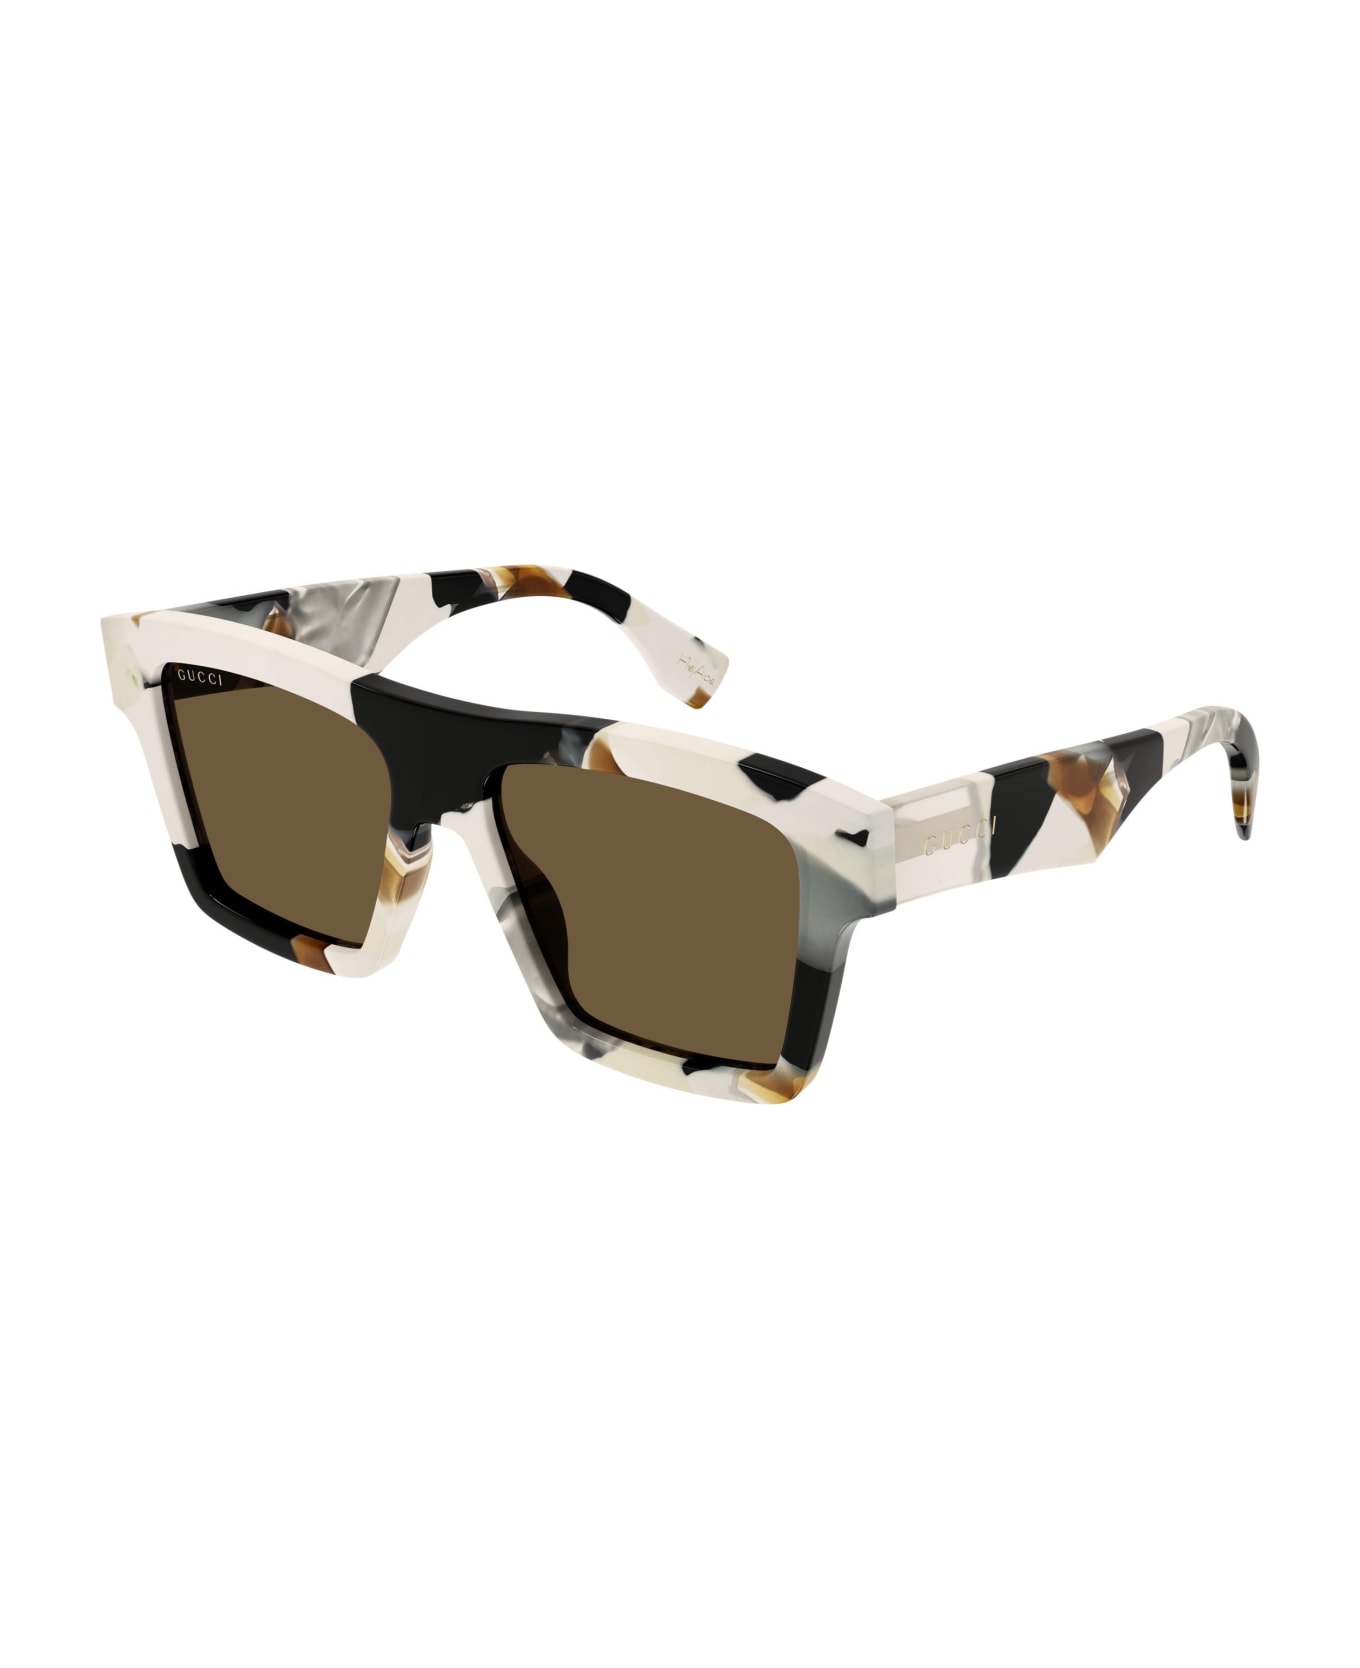 Gucci Eyewear Sunglasses - Bianco e marrone tartarugato/Marrone サングラス